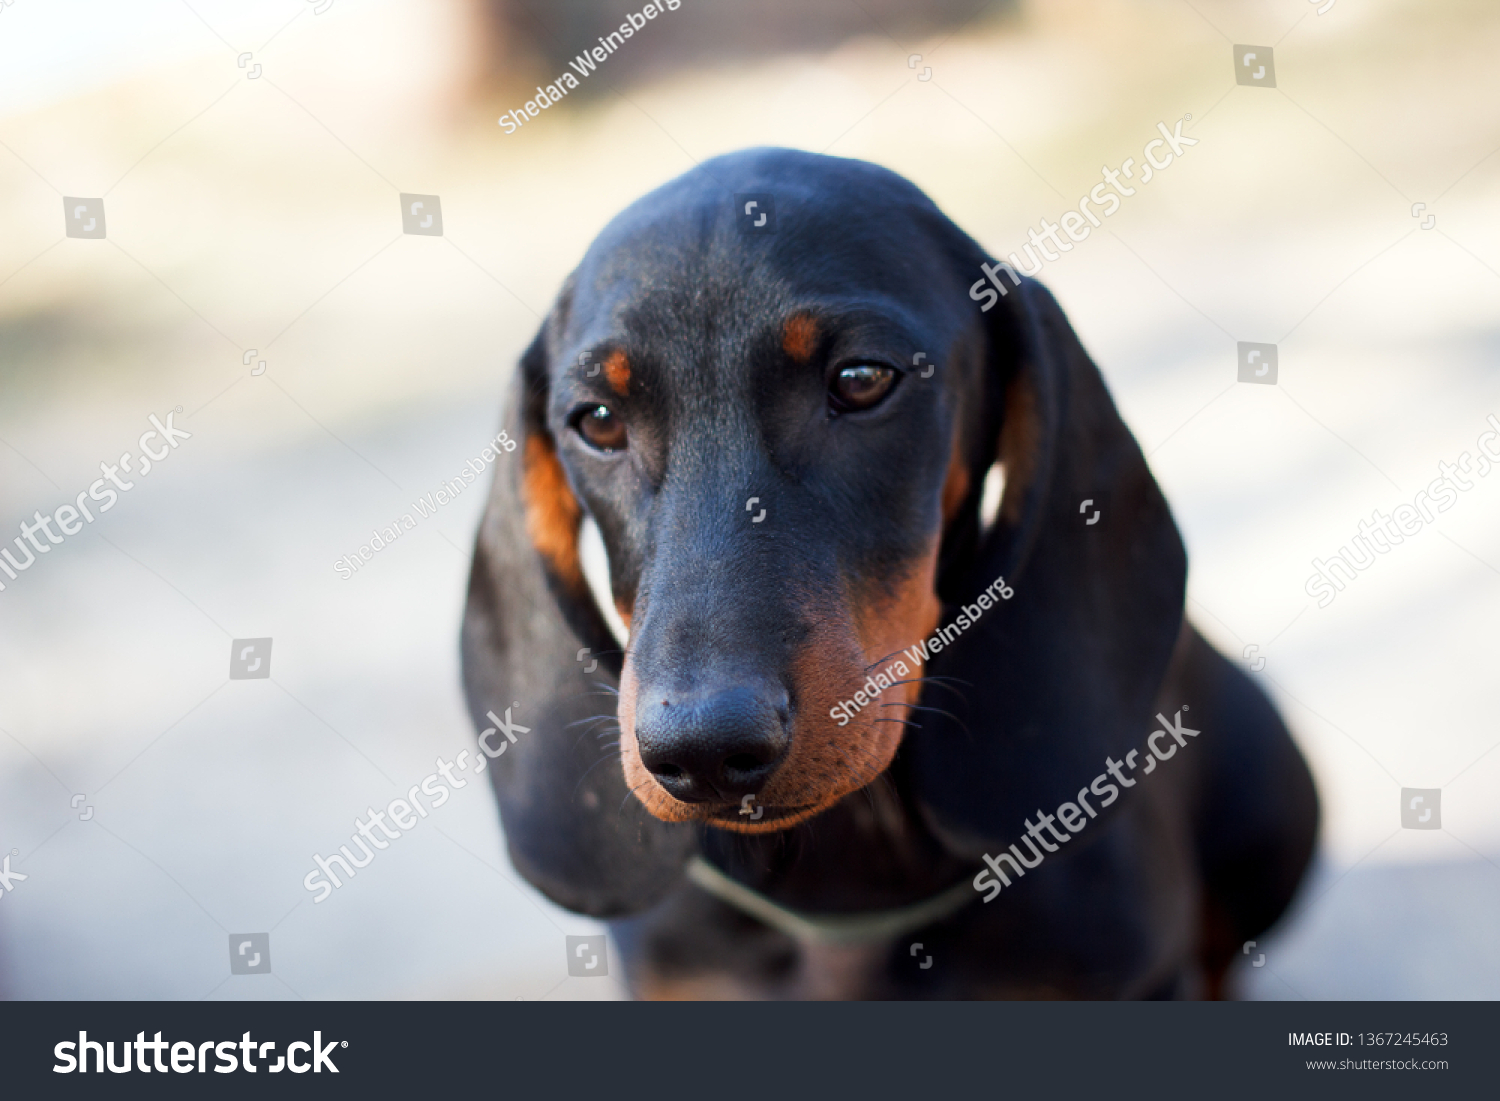 Cute dachshunds puppies #1367245463